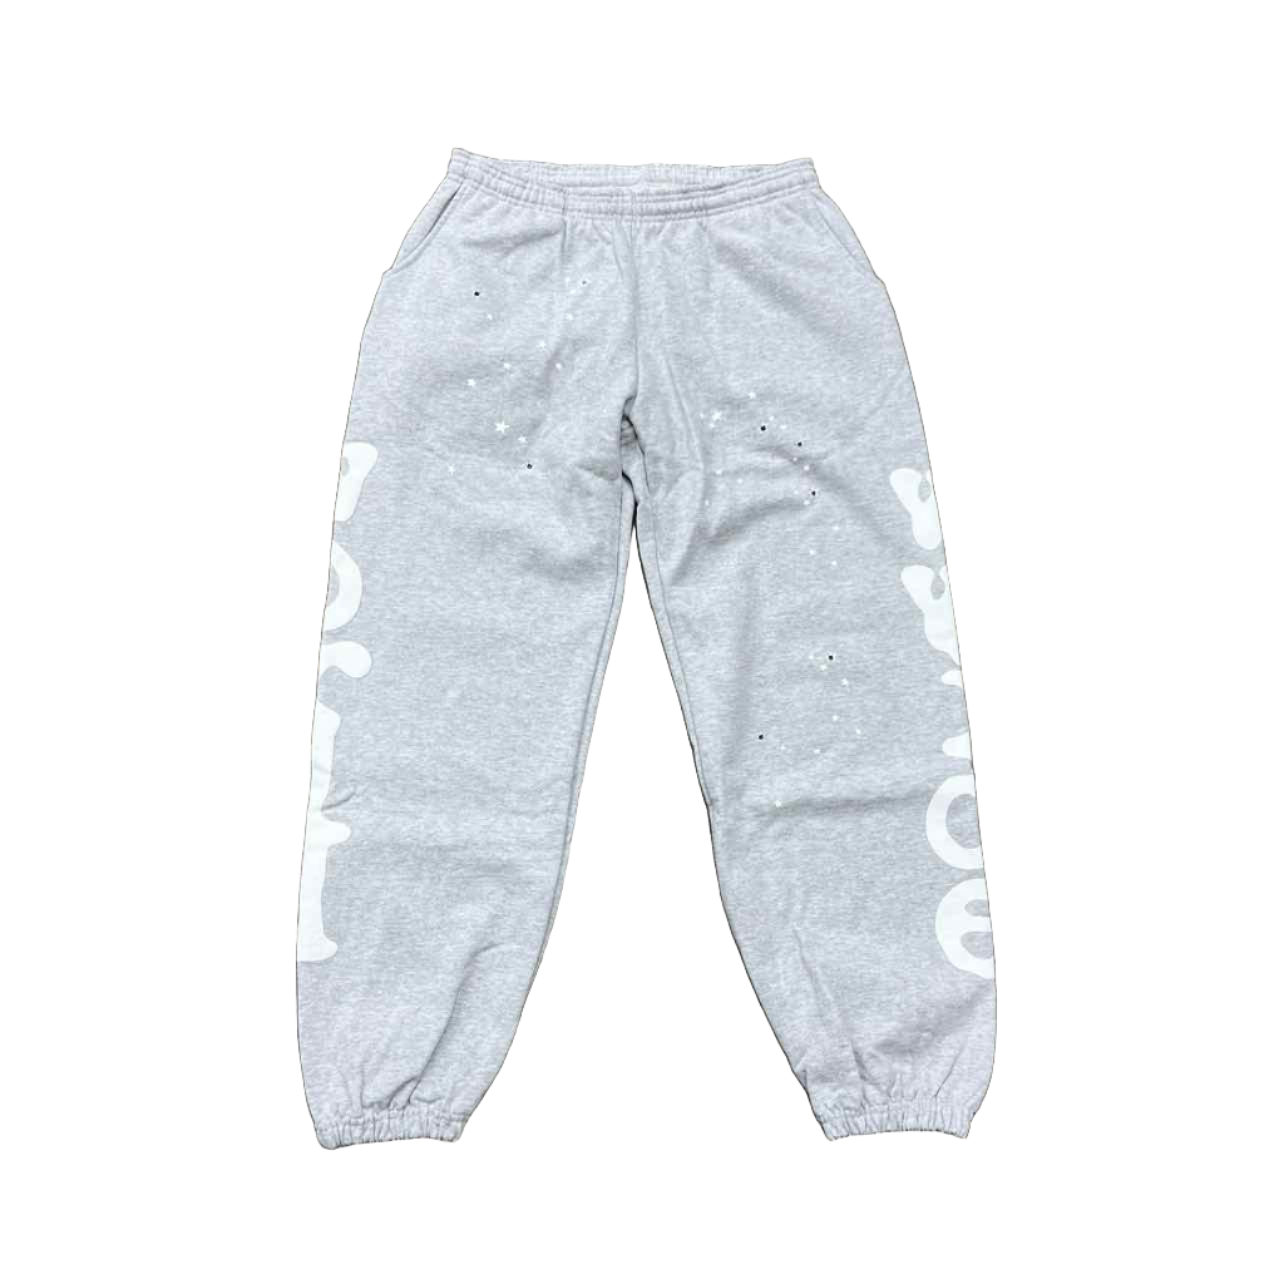 Sp5der Sweatpants "BELUGA" Grey New Size XL